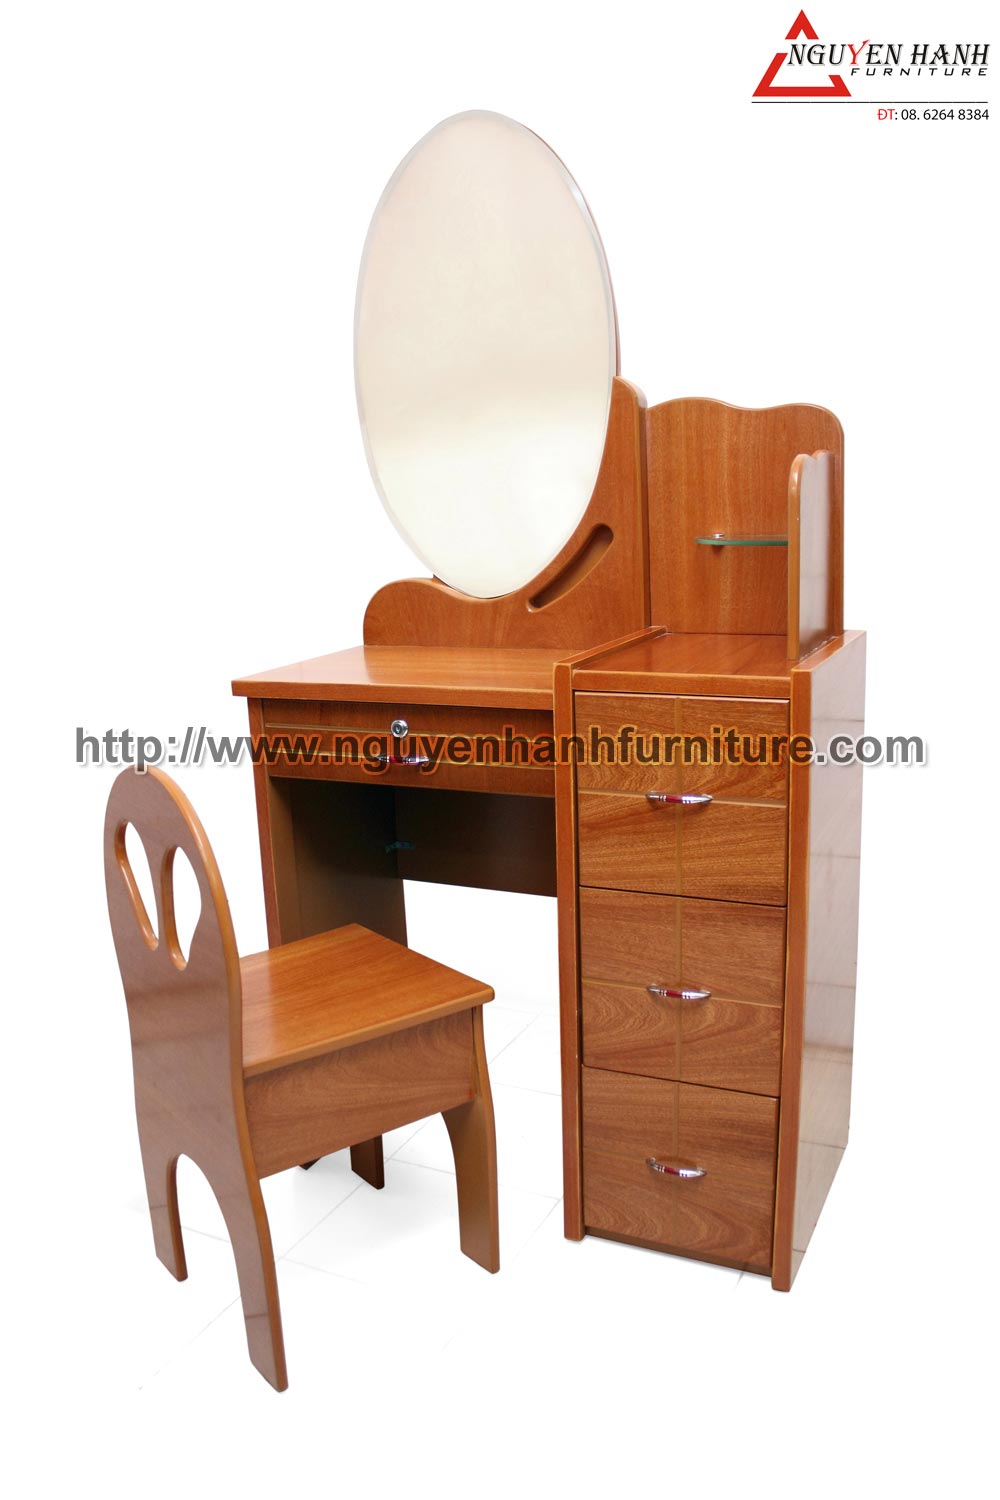 Name product: Oval shape Makeup desk - Dimensions: 80 x 42 x 157 - Description: Veneer bead tree wood